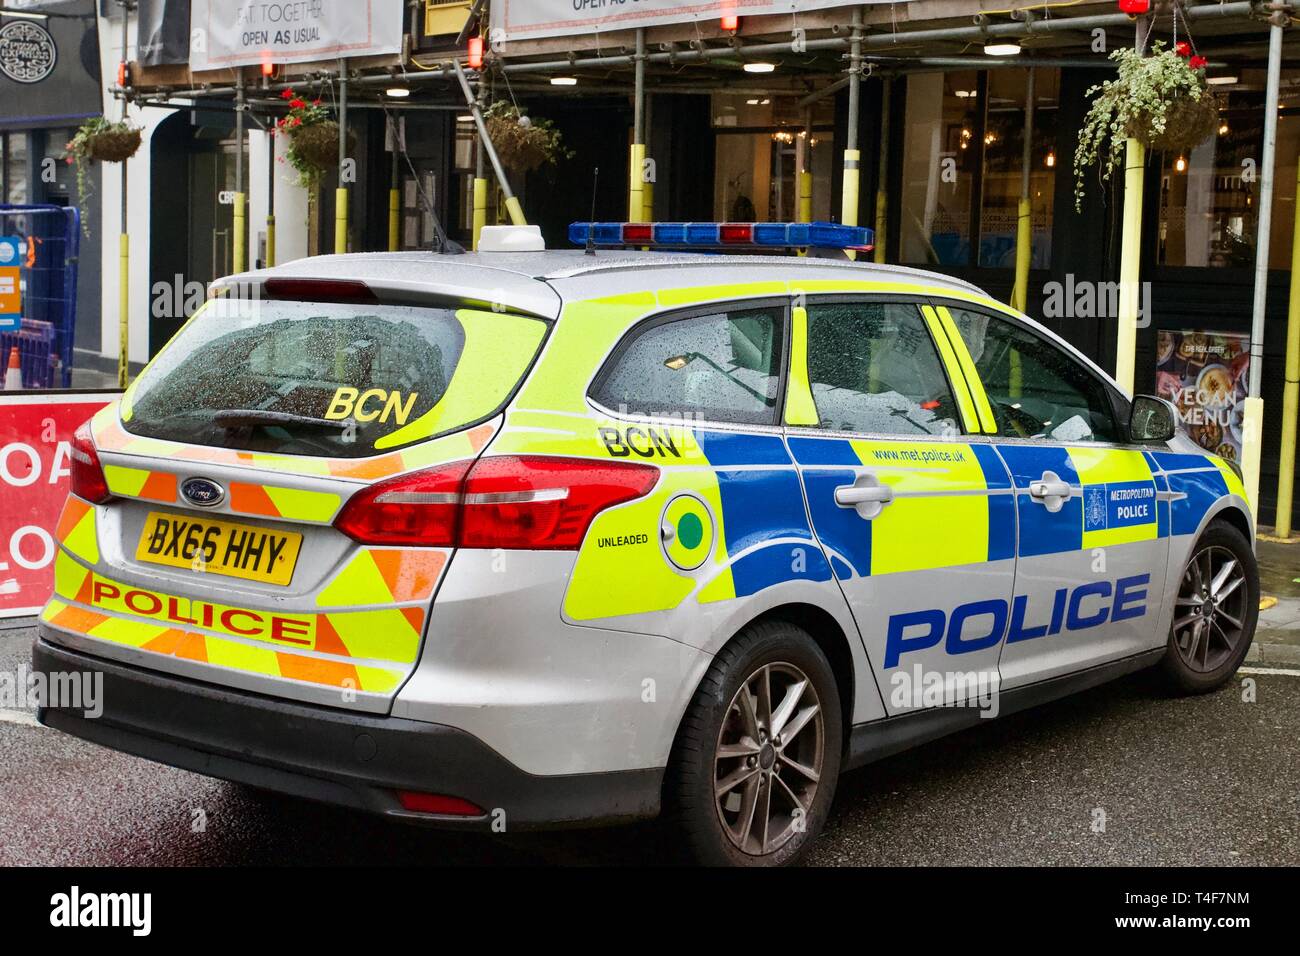 Police patrol car, Covent Garden, London, England. Stock Photo